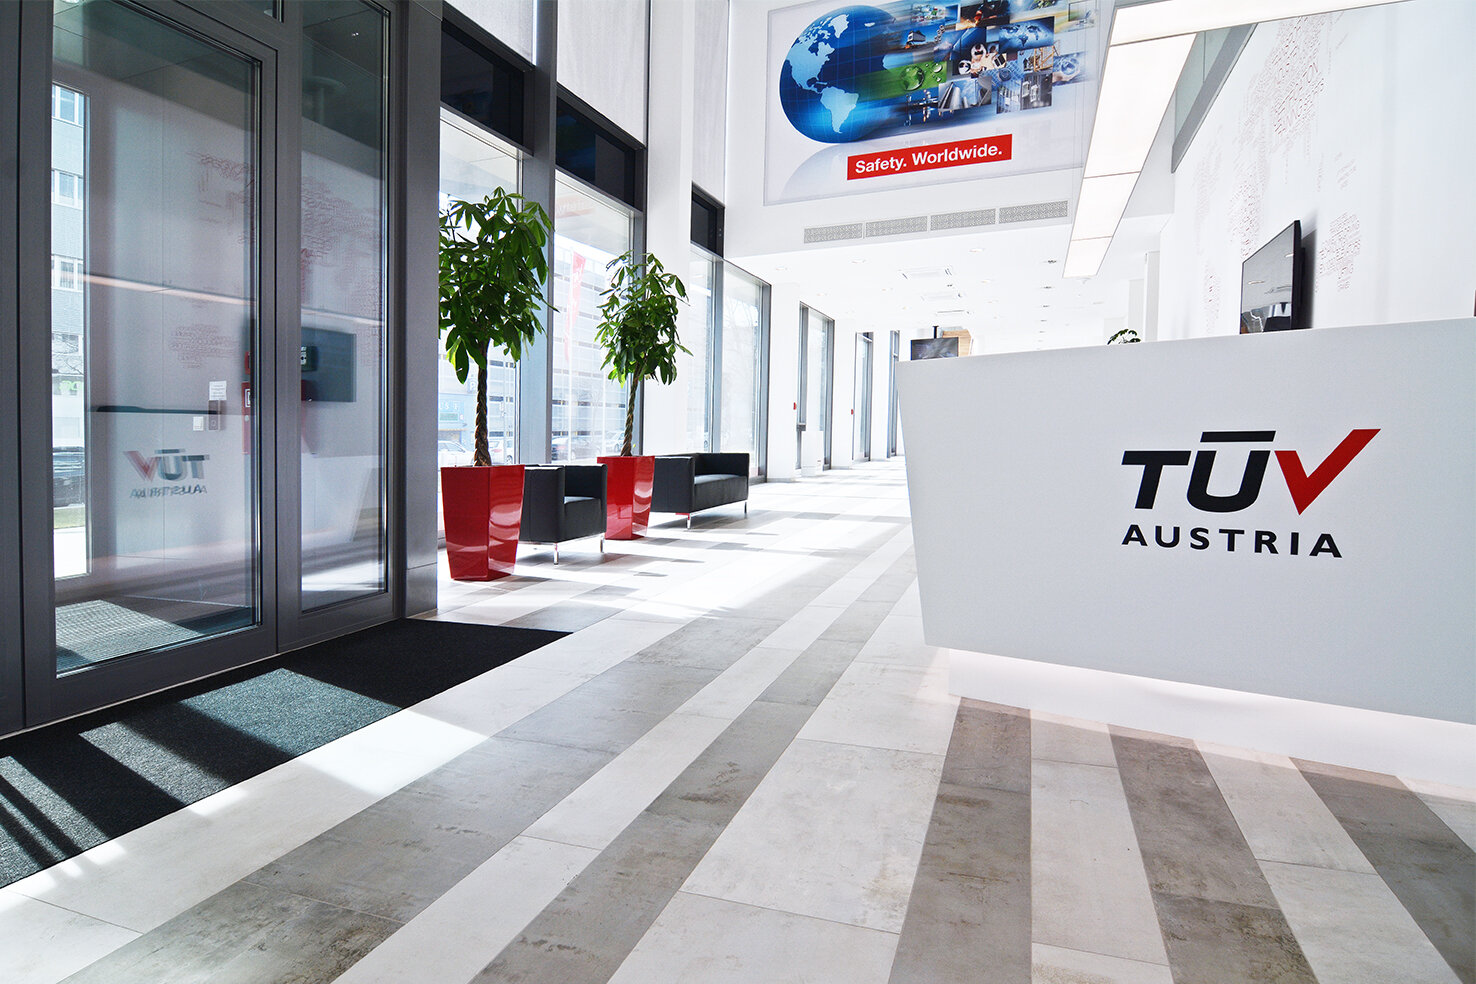 Entrance area of the TÜV Austria company. 